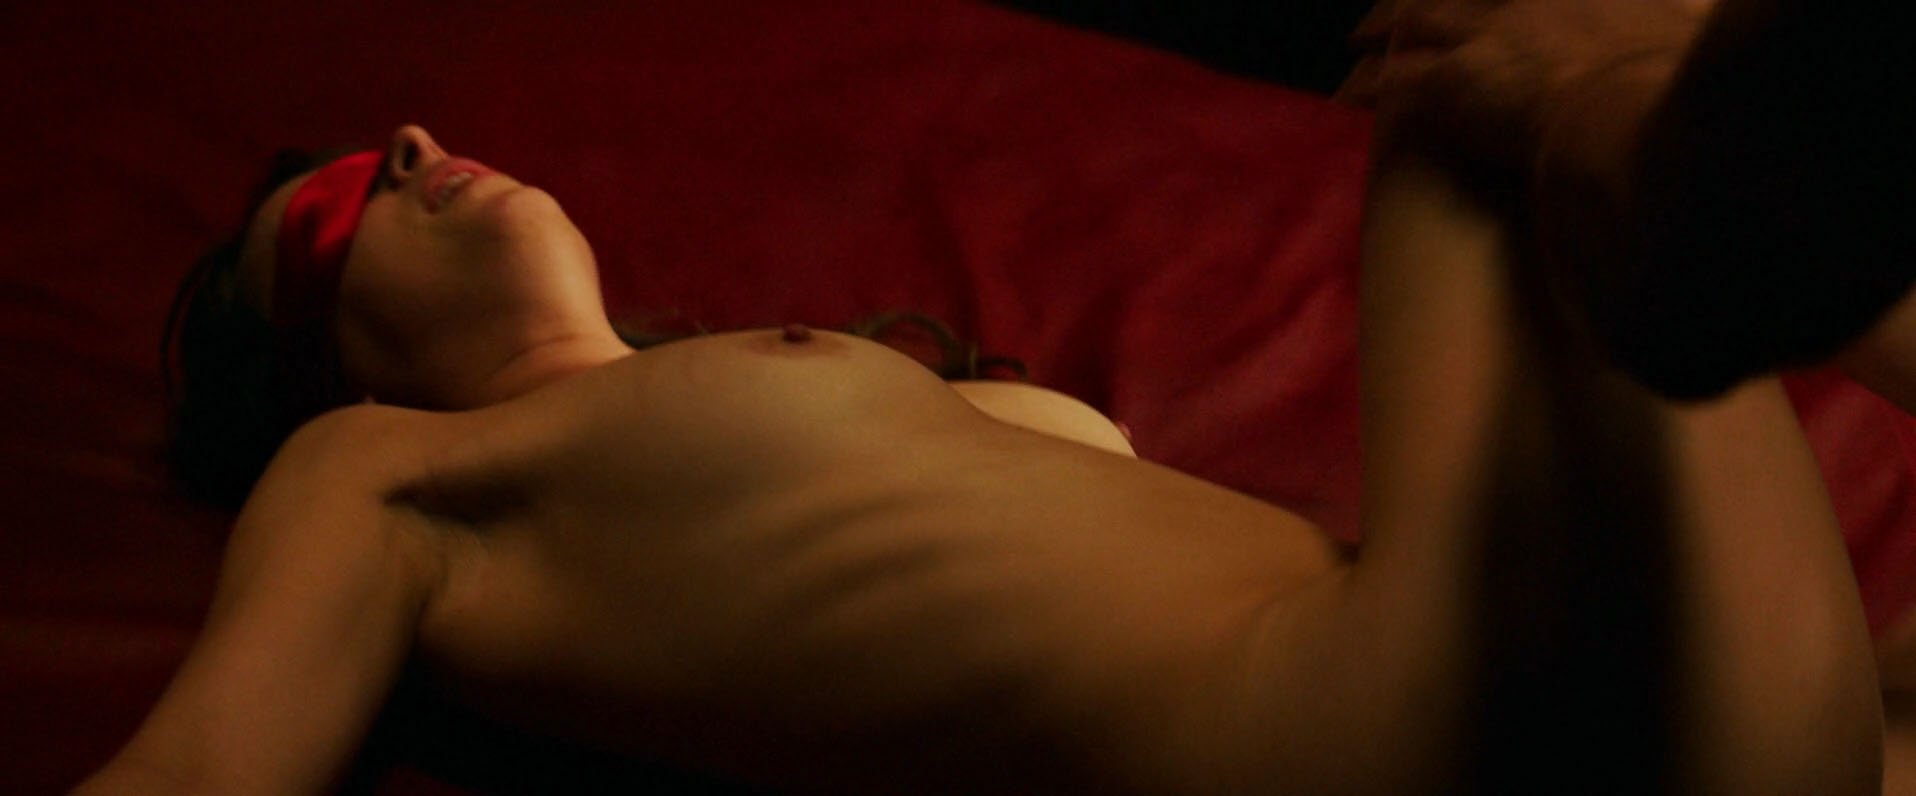 Dakota Johnson in nude scene from new movie Fifty Shades Darker. 